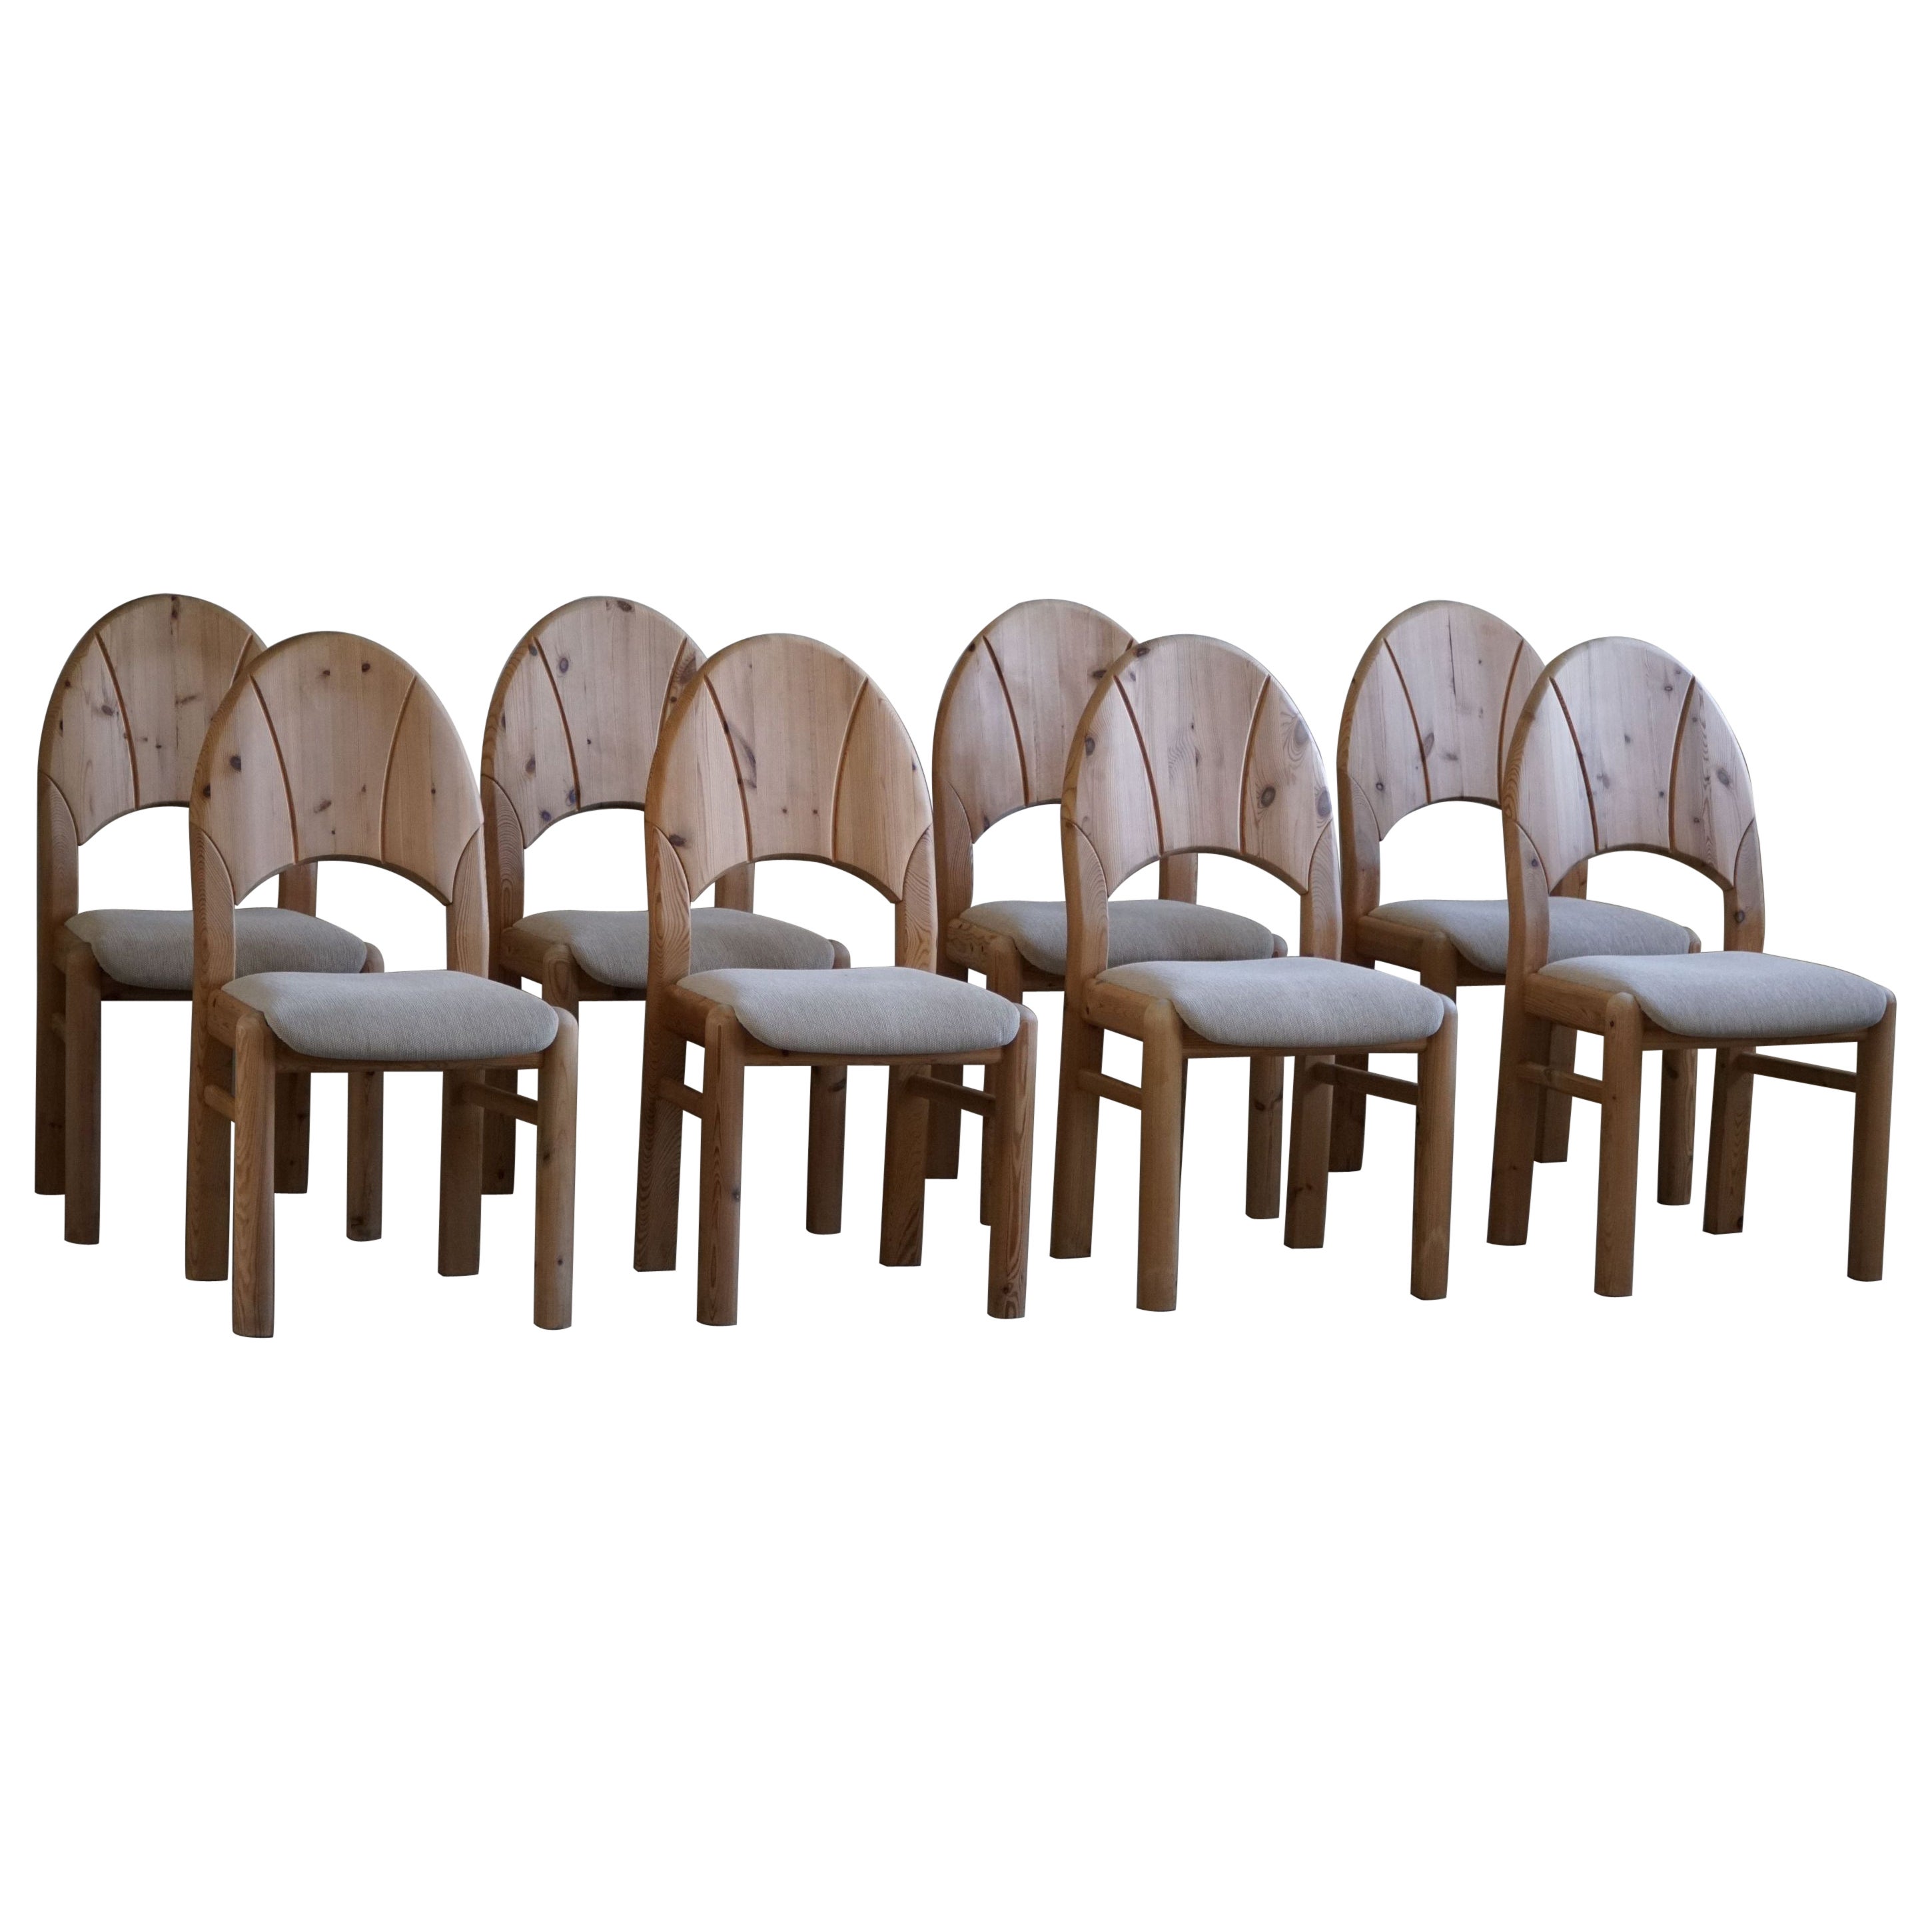 Set of 8 Sculptural Danish Modern Brutalist Chairs in Pine & Wool, 1970s